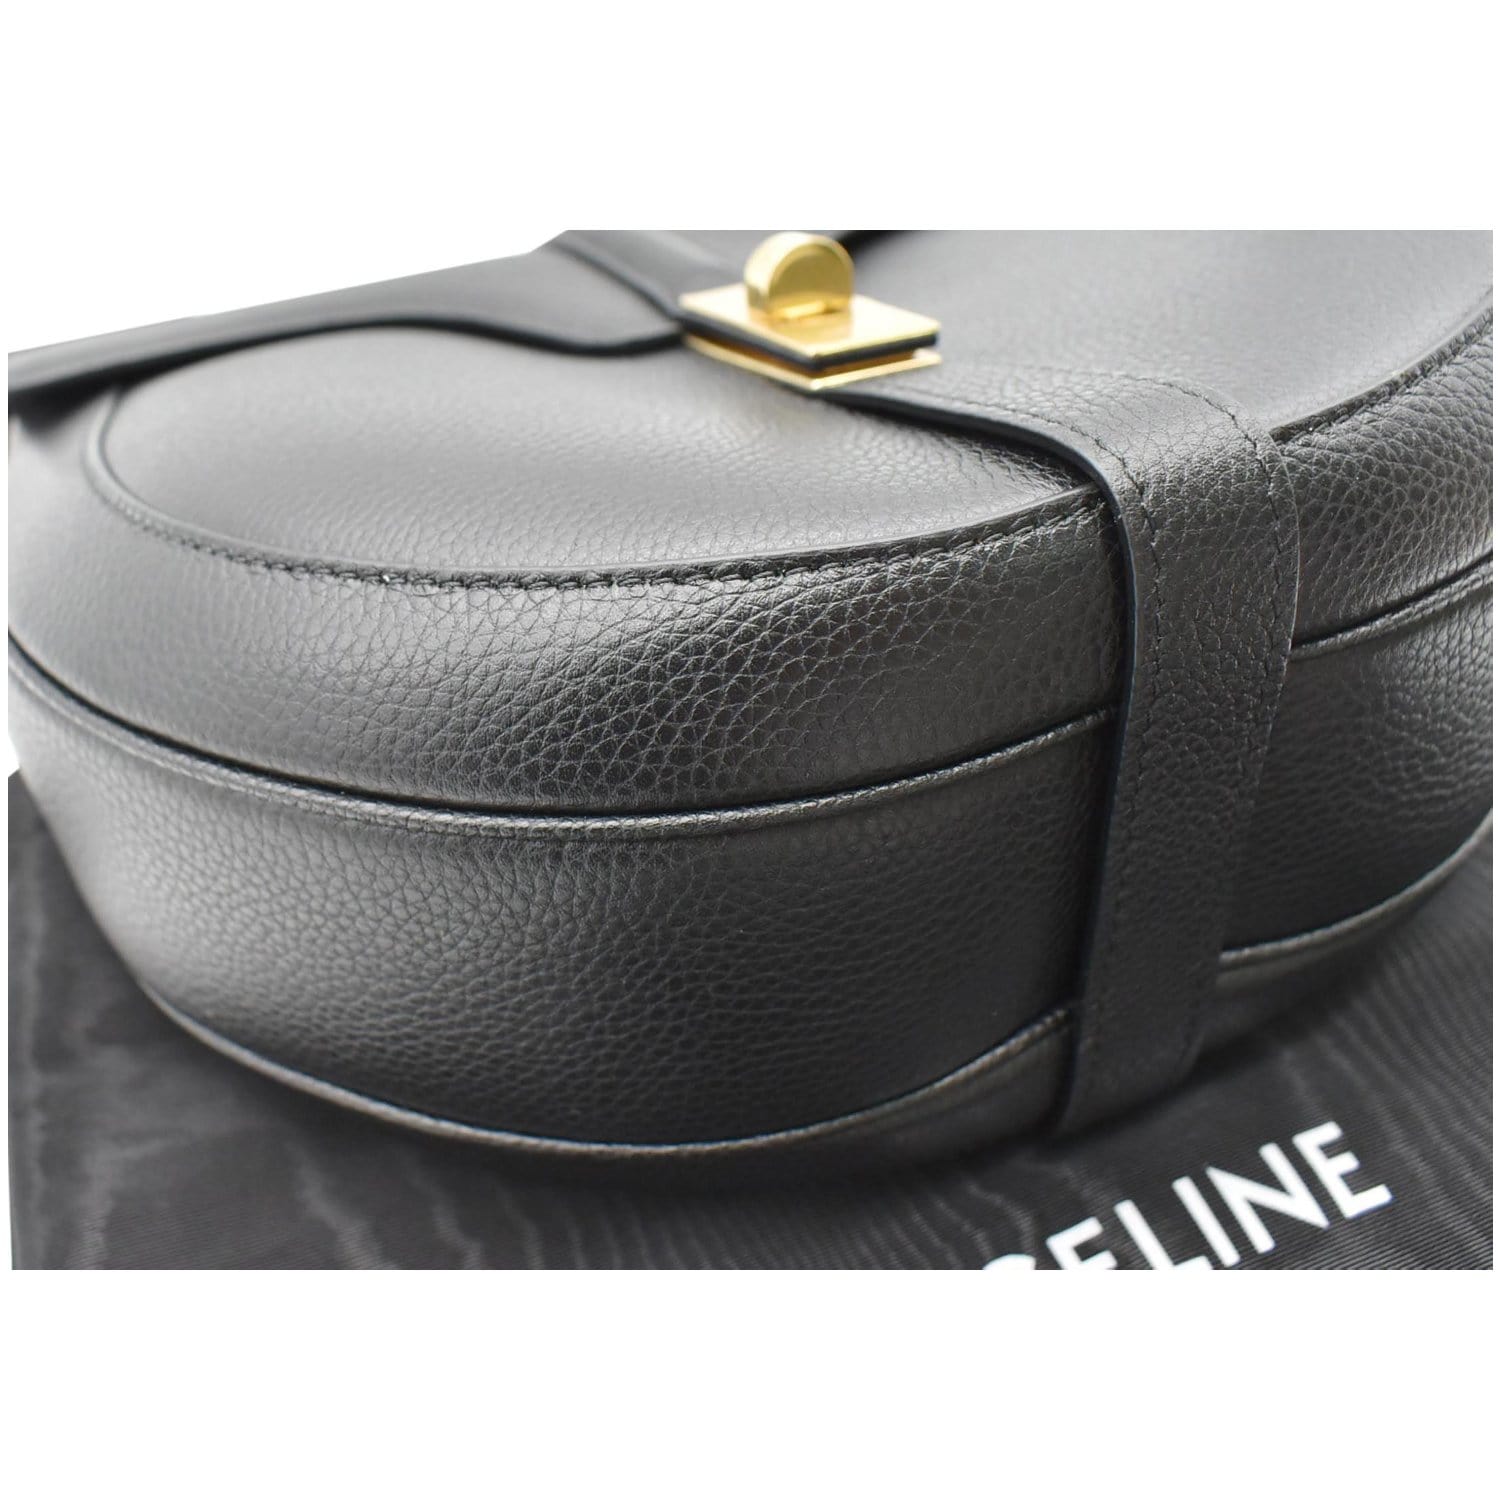 Celine Sac 16 Besace Handbag